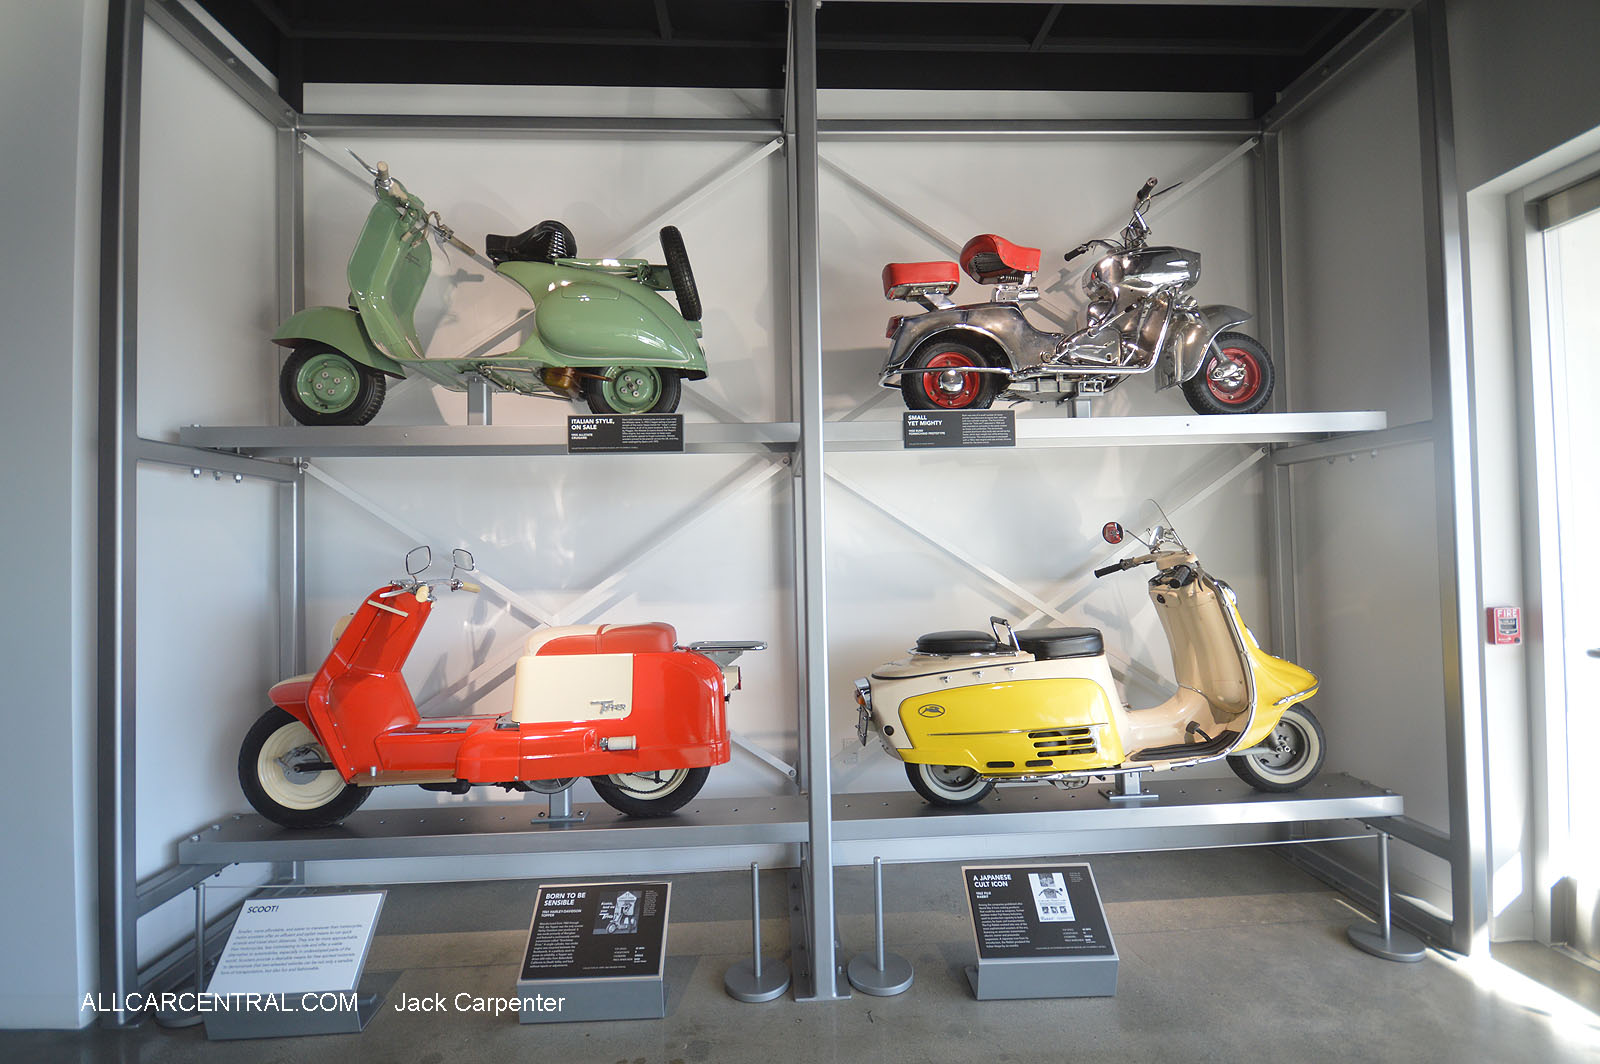   Petersen Automotive Museum 
2016